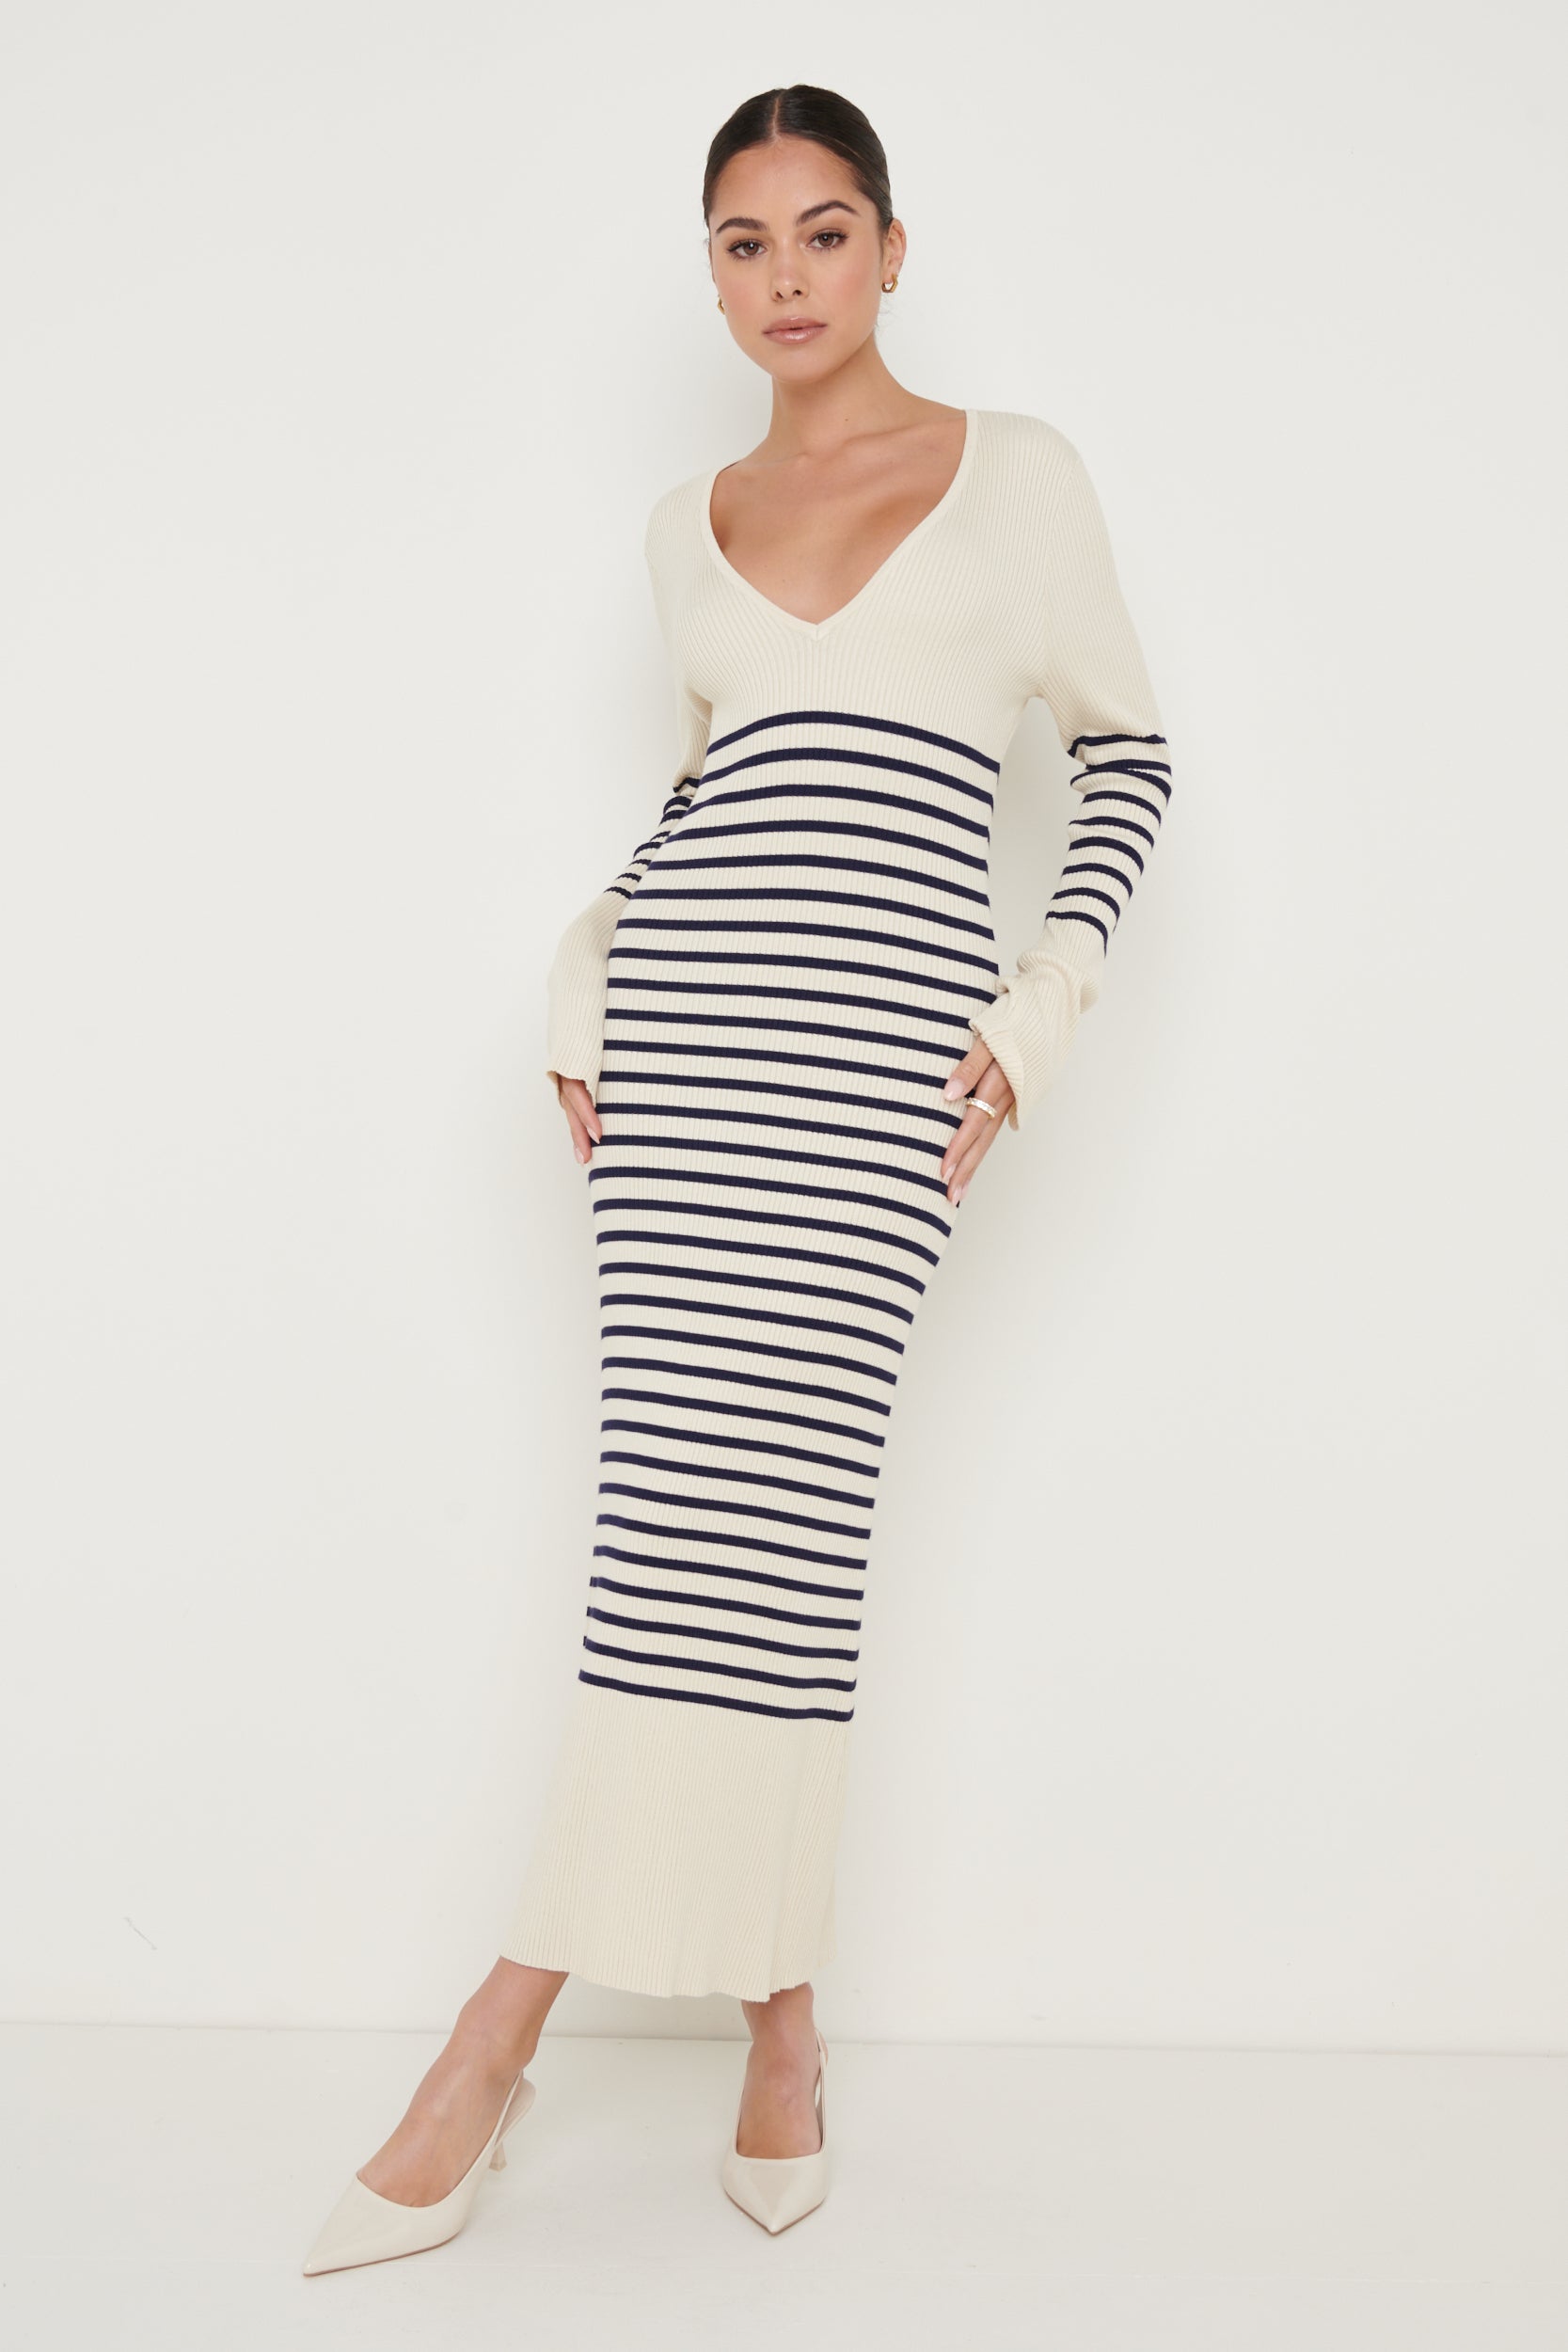 Vanessa Striped Knit Dress - Cream and Blue, XS